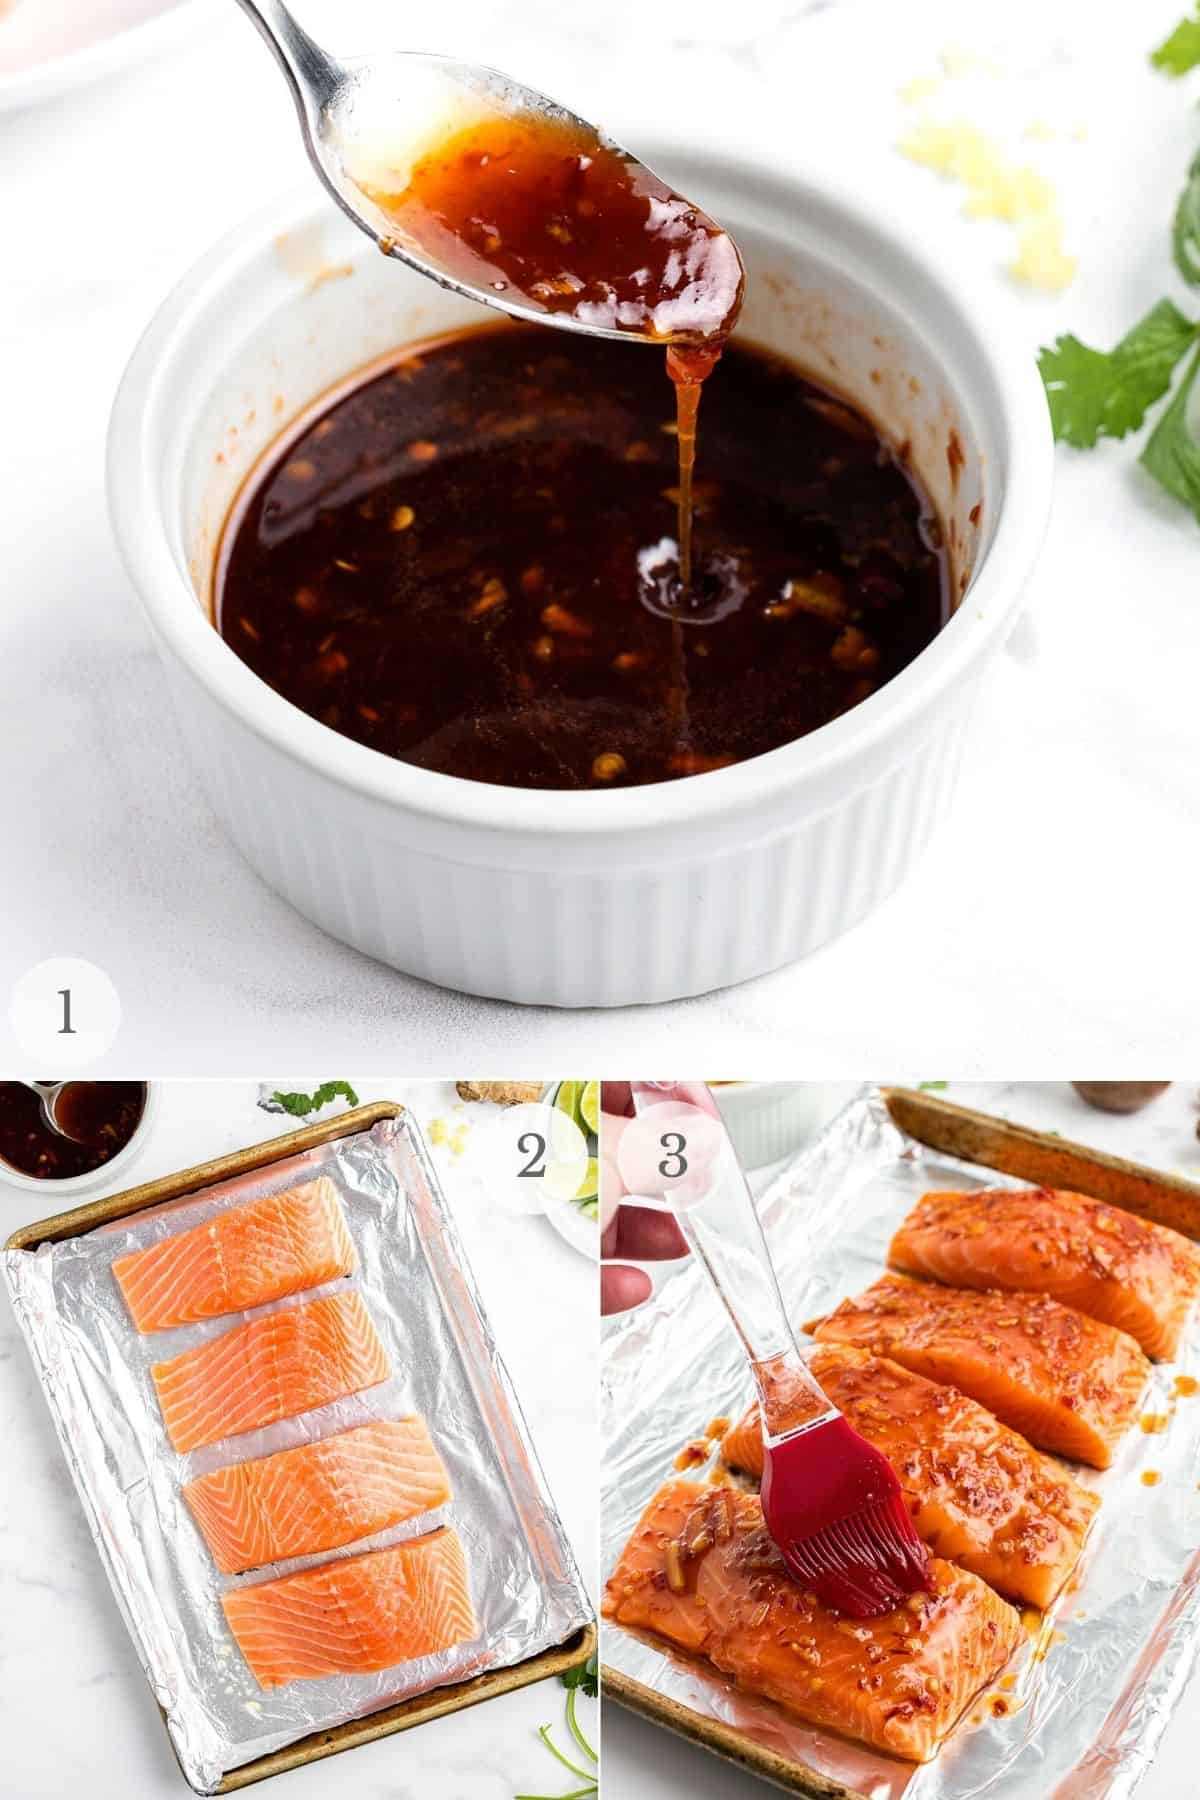 baked salmon recipe steps 1-3